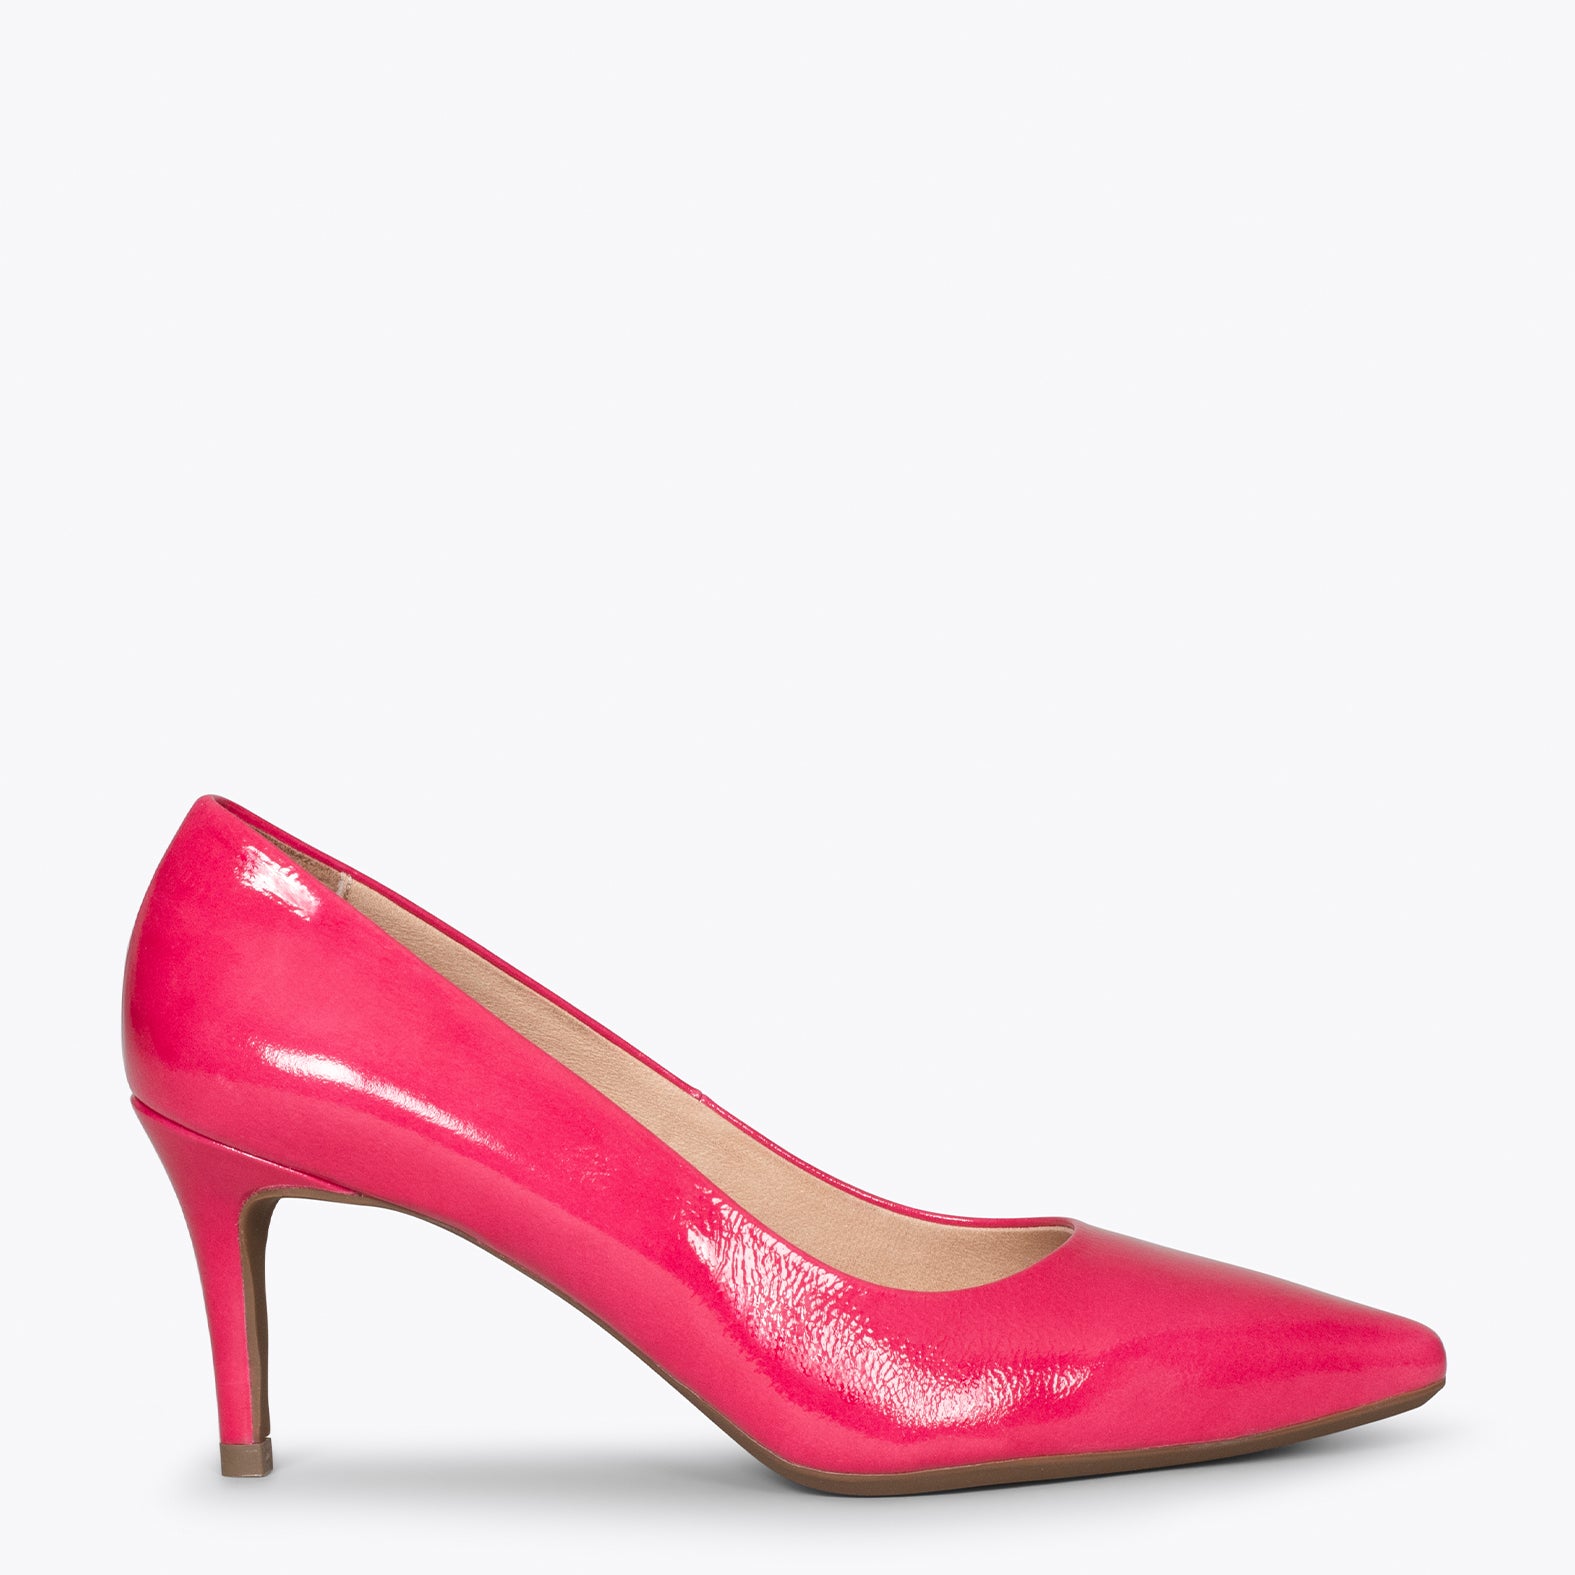 STILETTO PATENT – FUCHSIA patent leather stiletto heel